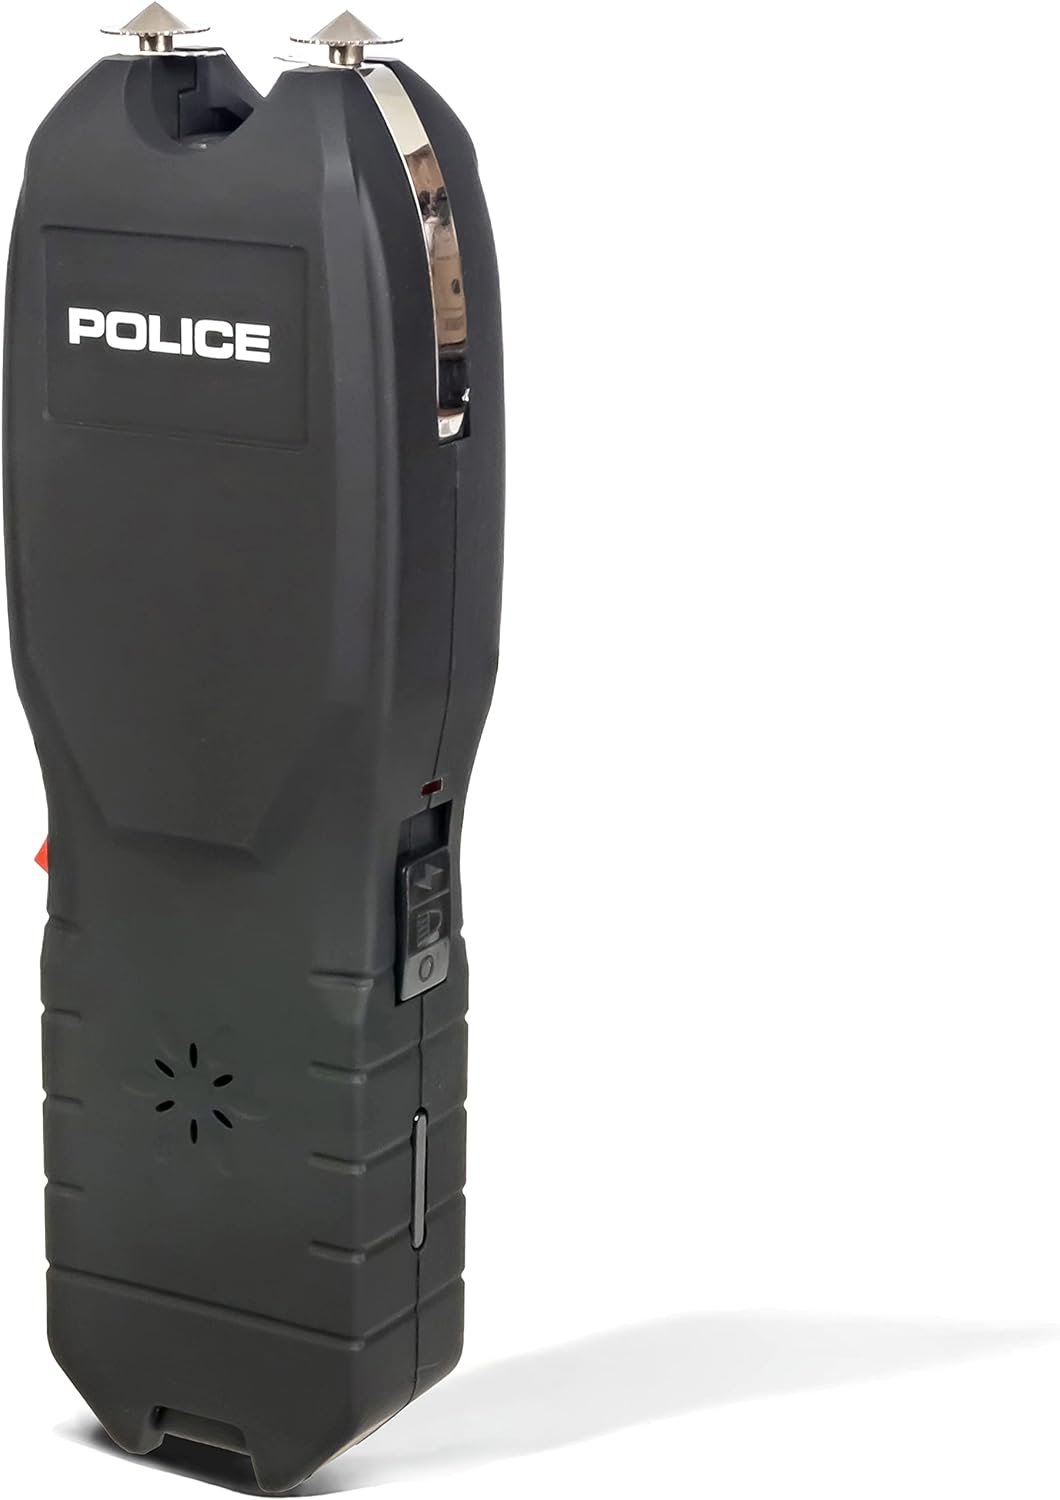 POLICE 2101 Stun Gun with LED Flashlight and Siren Alarm